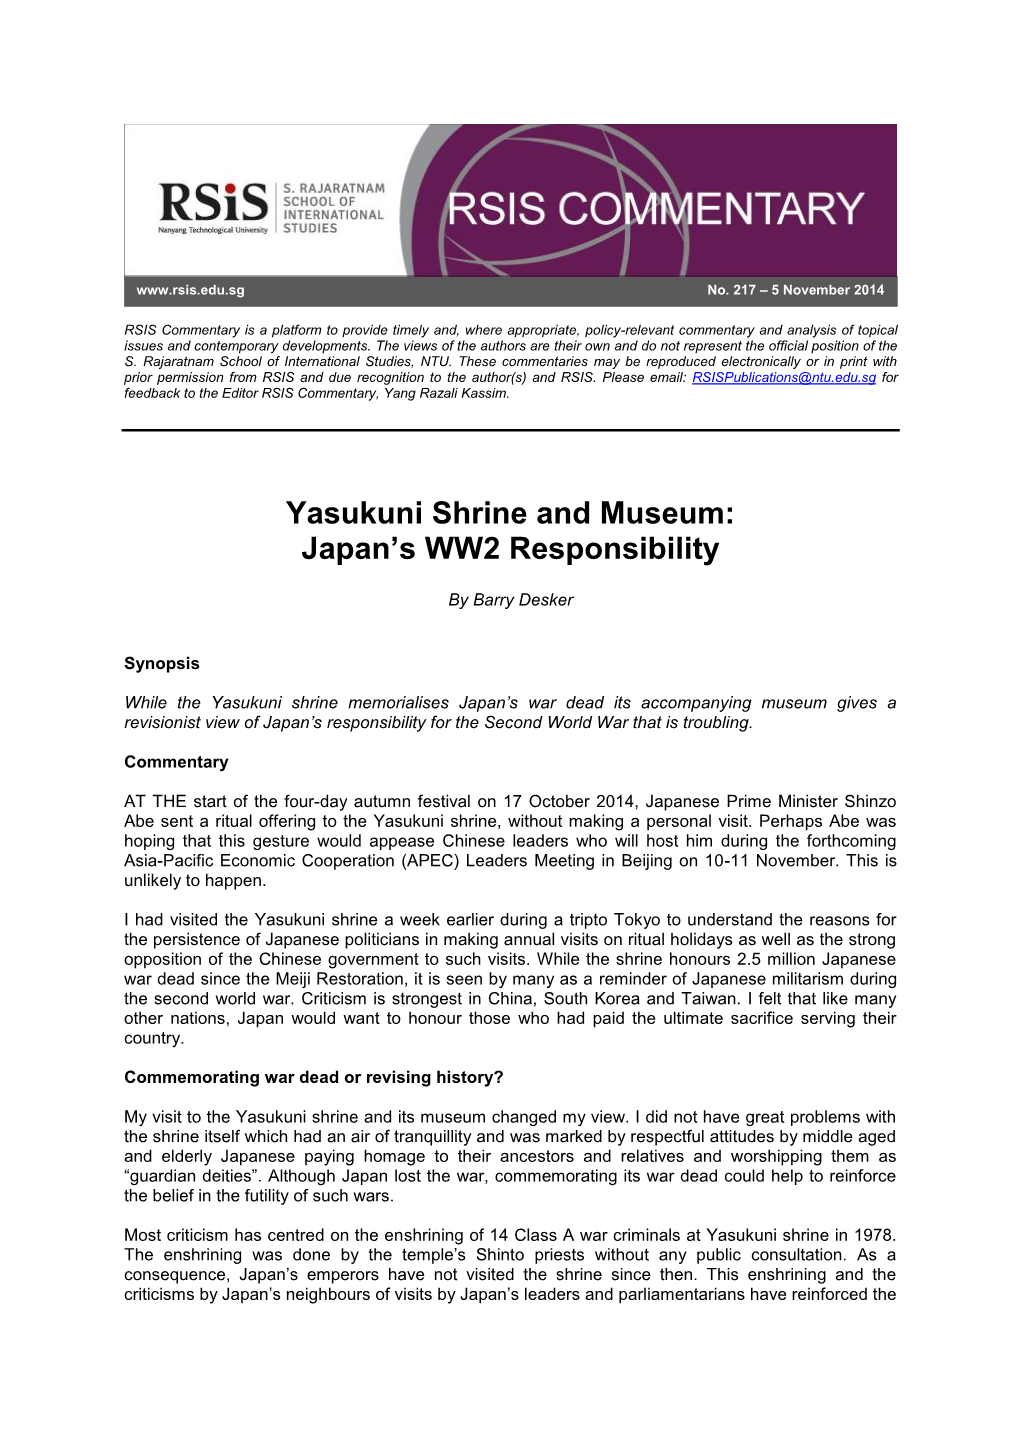 Yasukuni Shrine and Museum: Japan's WW2 Responsibility